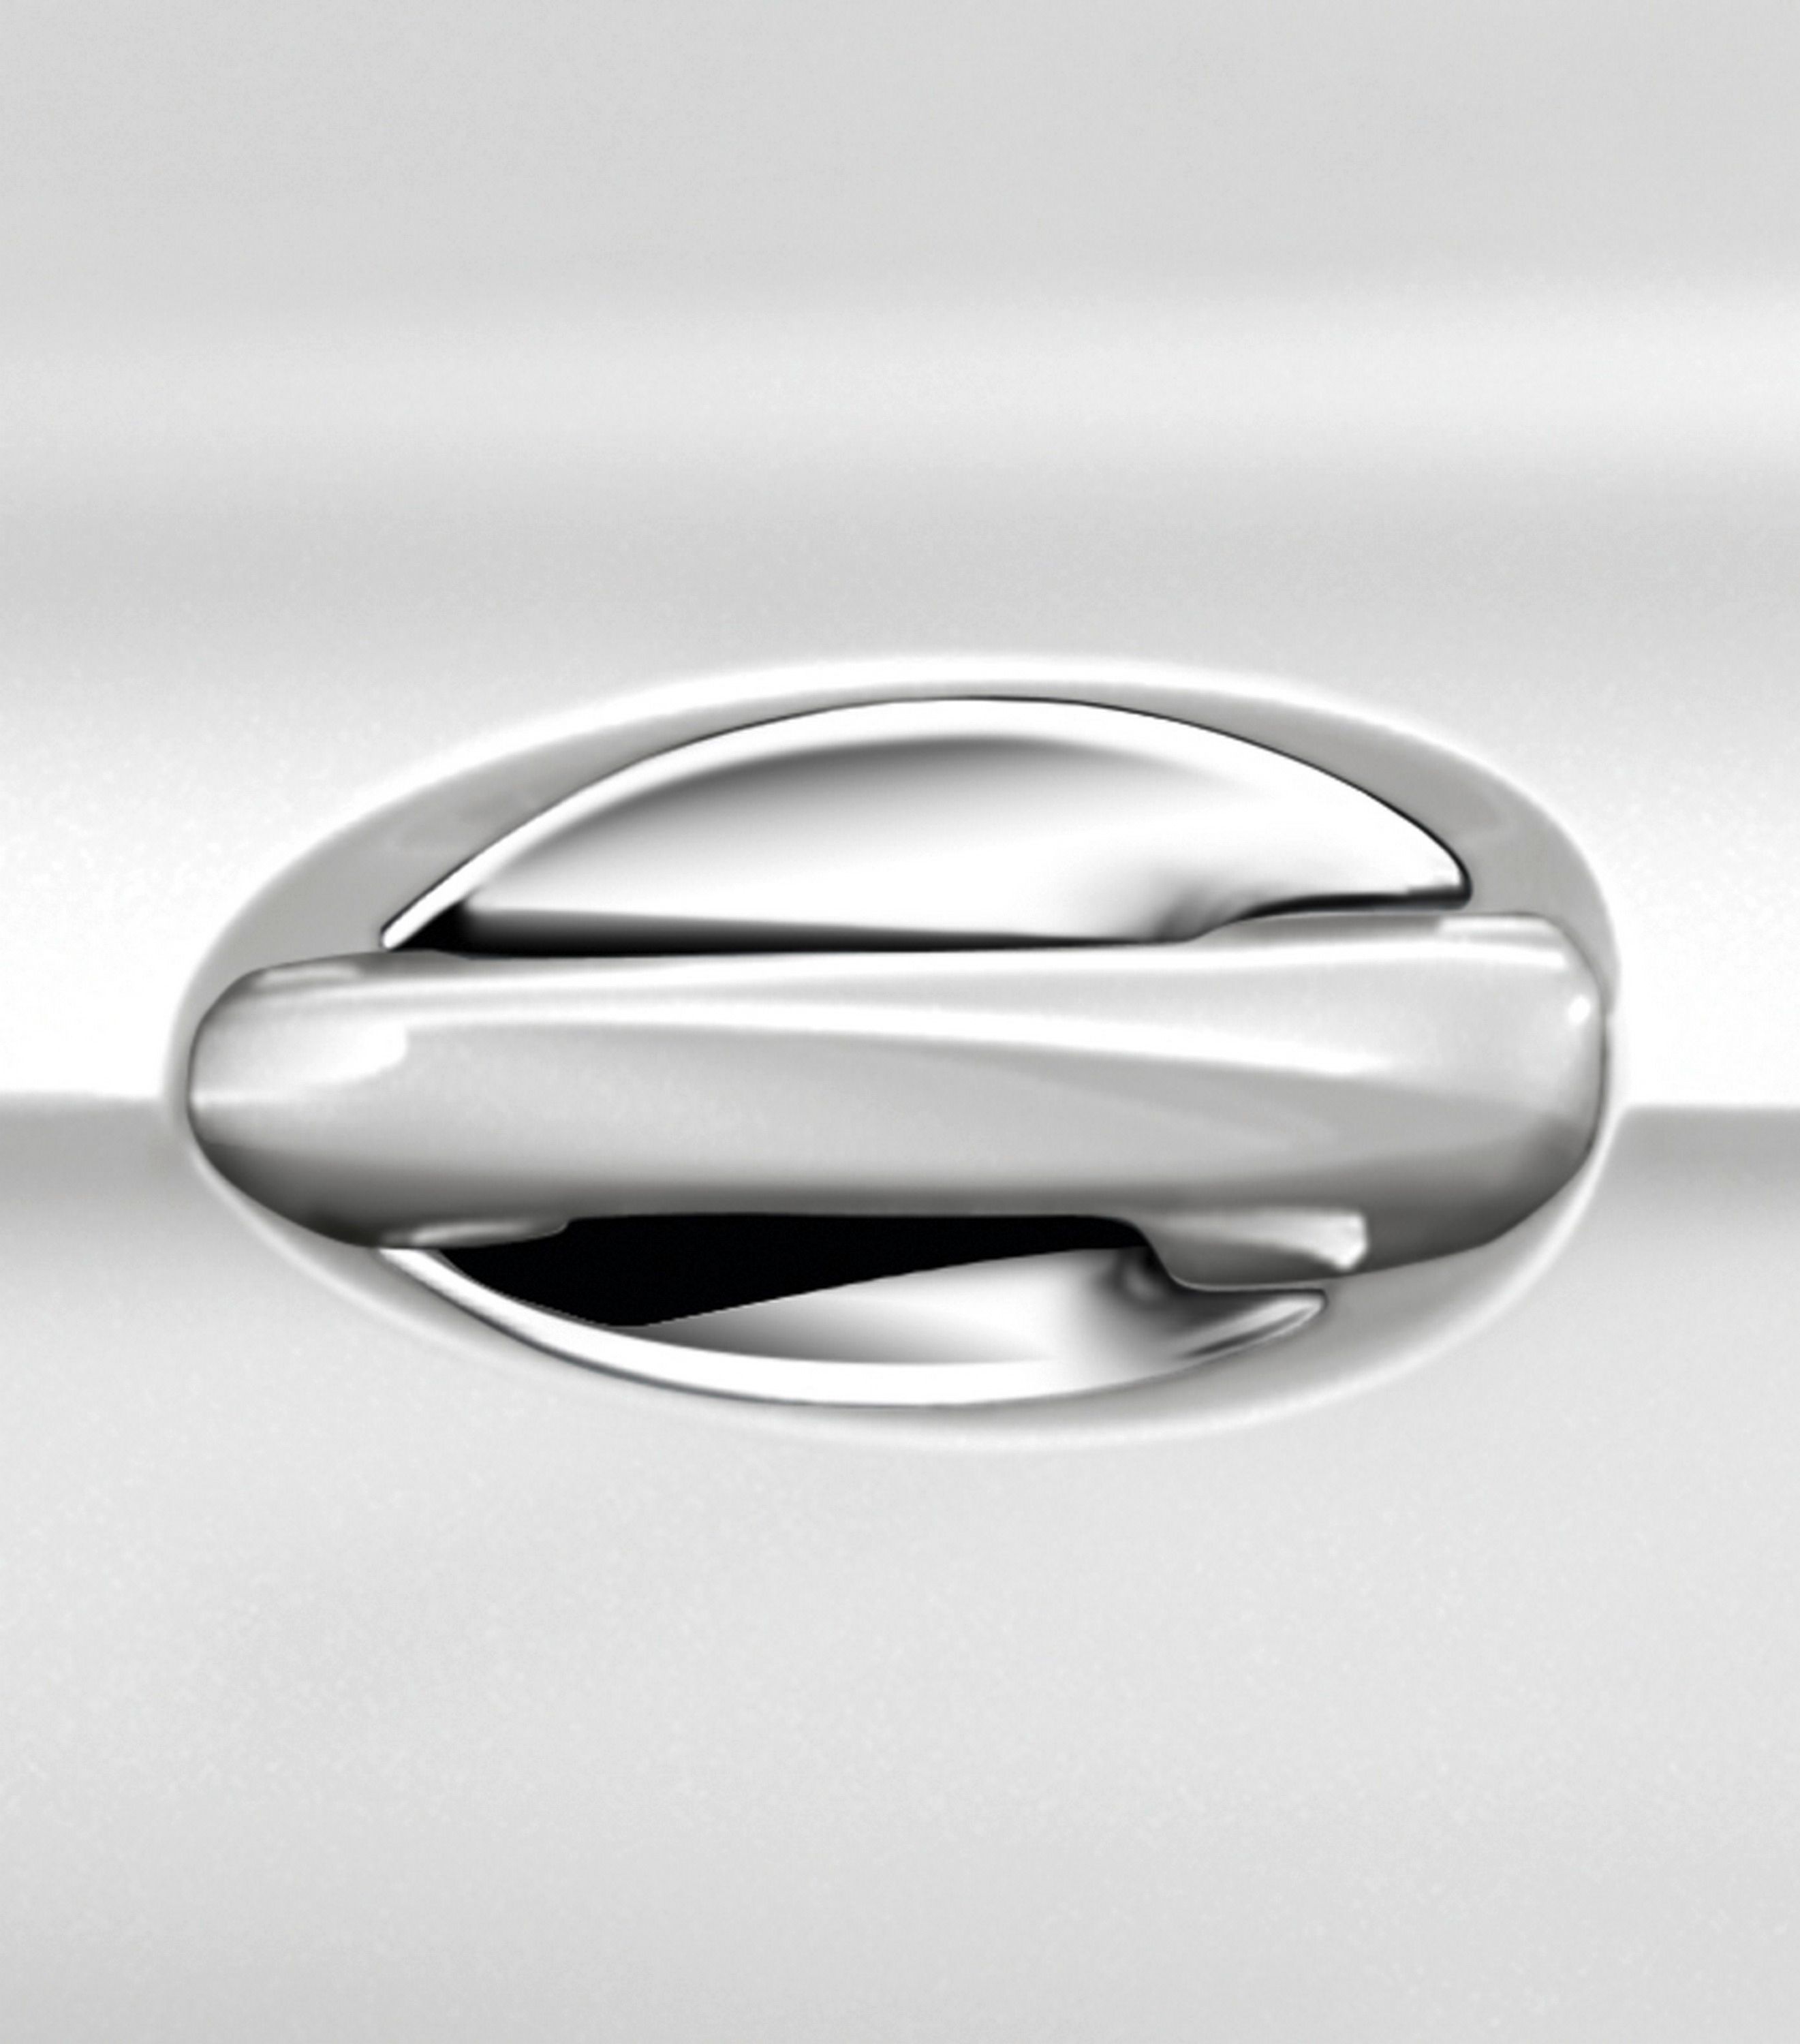 2016 Mercedes-Benz GLC Genuine Accessories